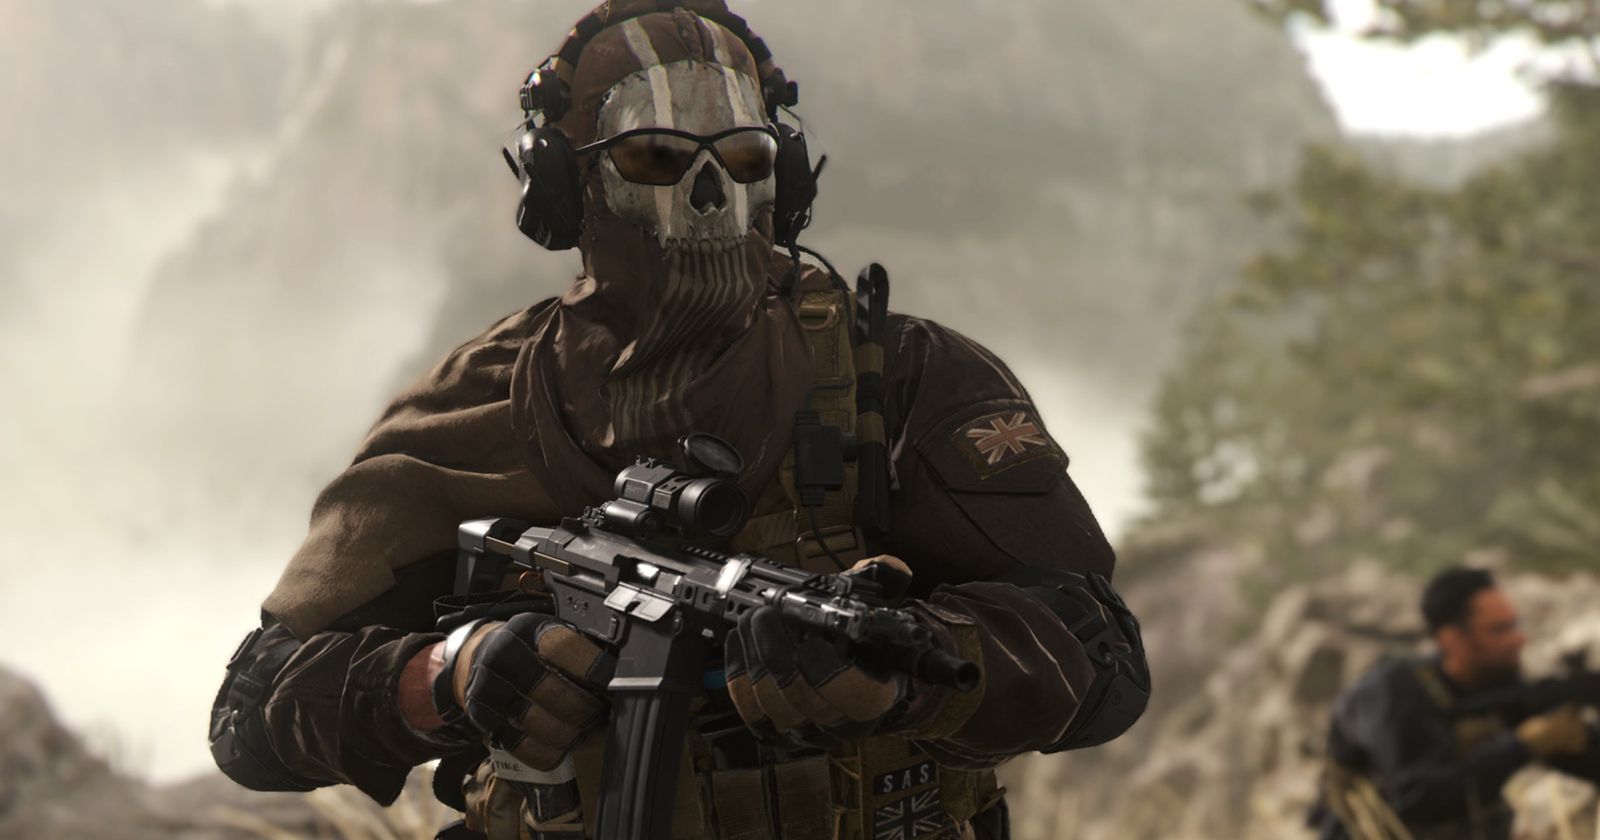 Modern Warfare 2 - Full Game Campaign Walkthrough (MW2 Remastered